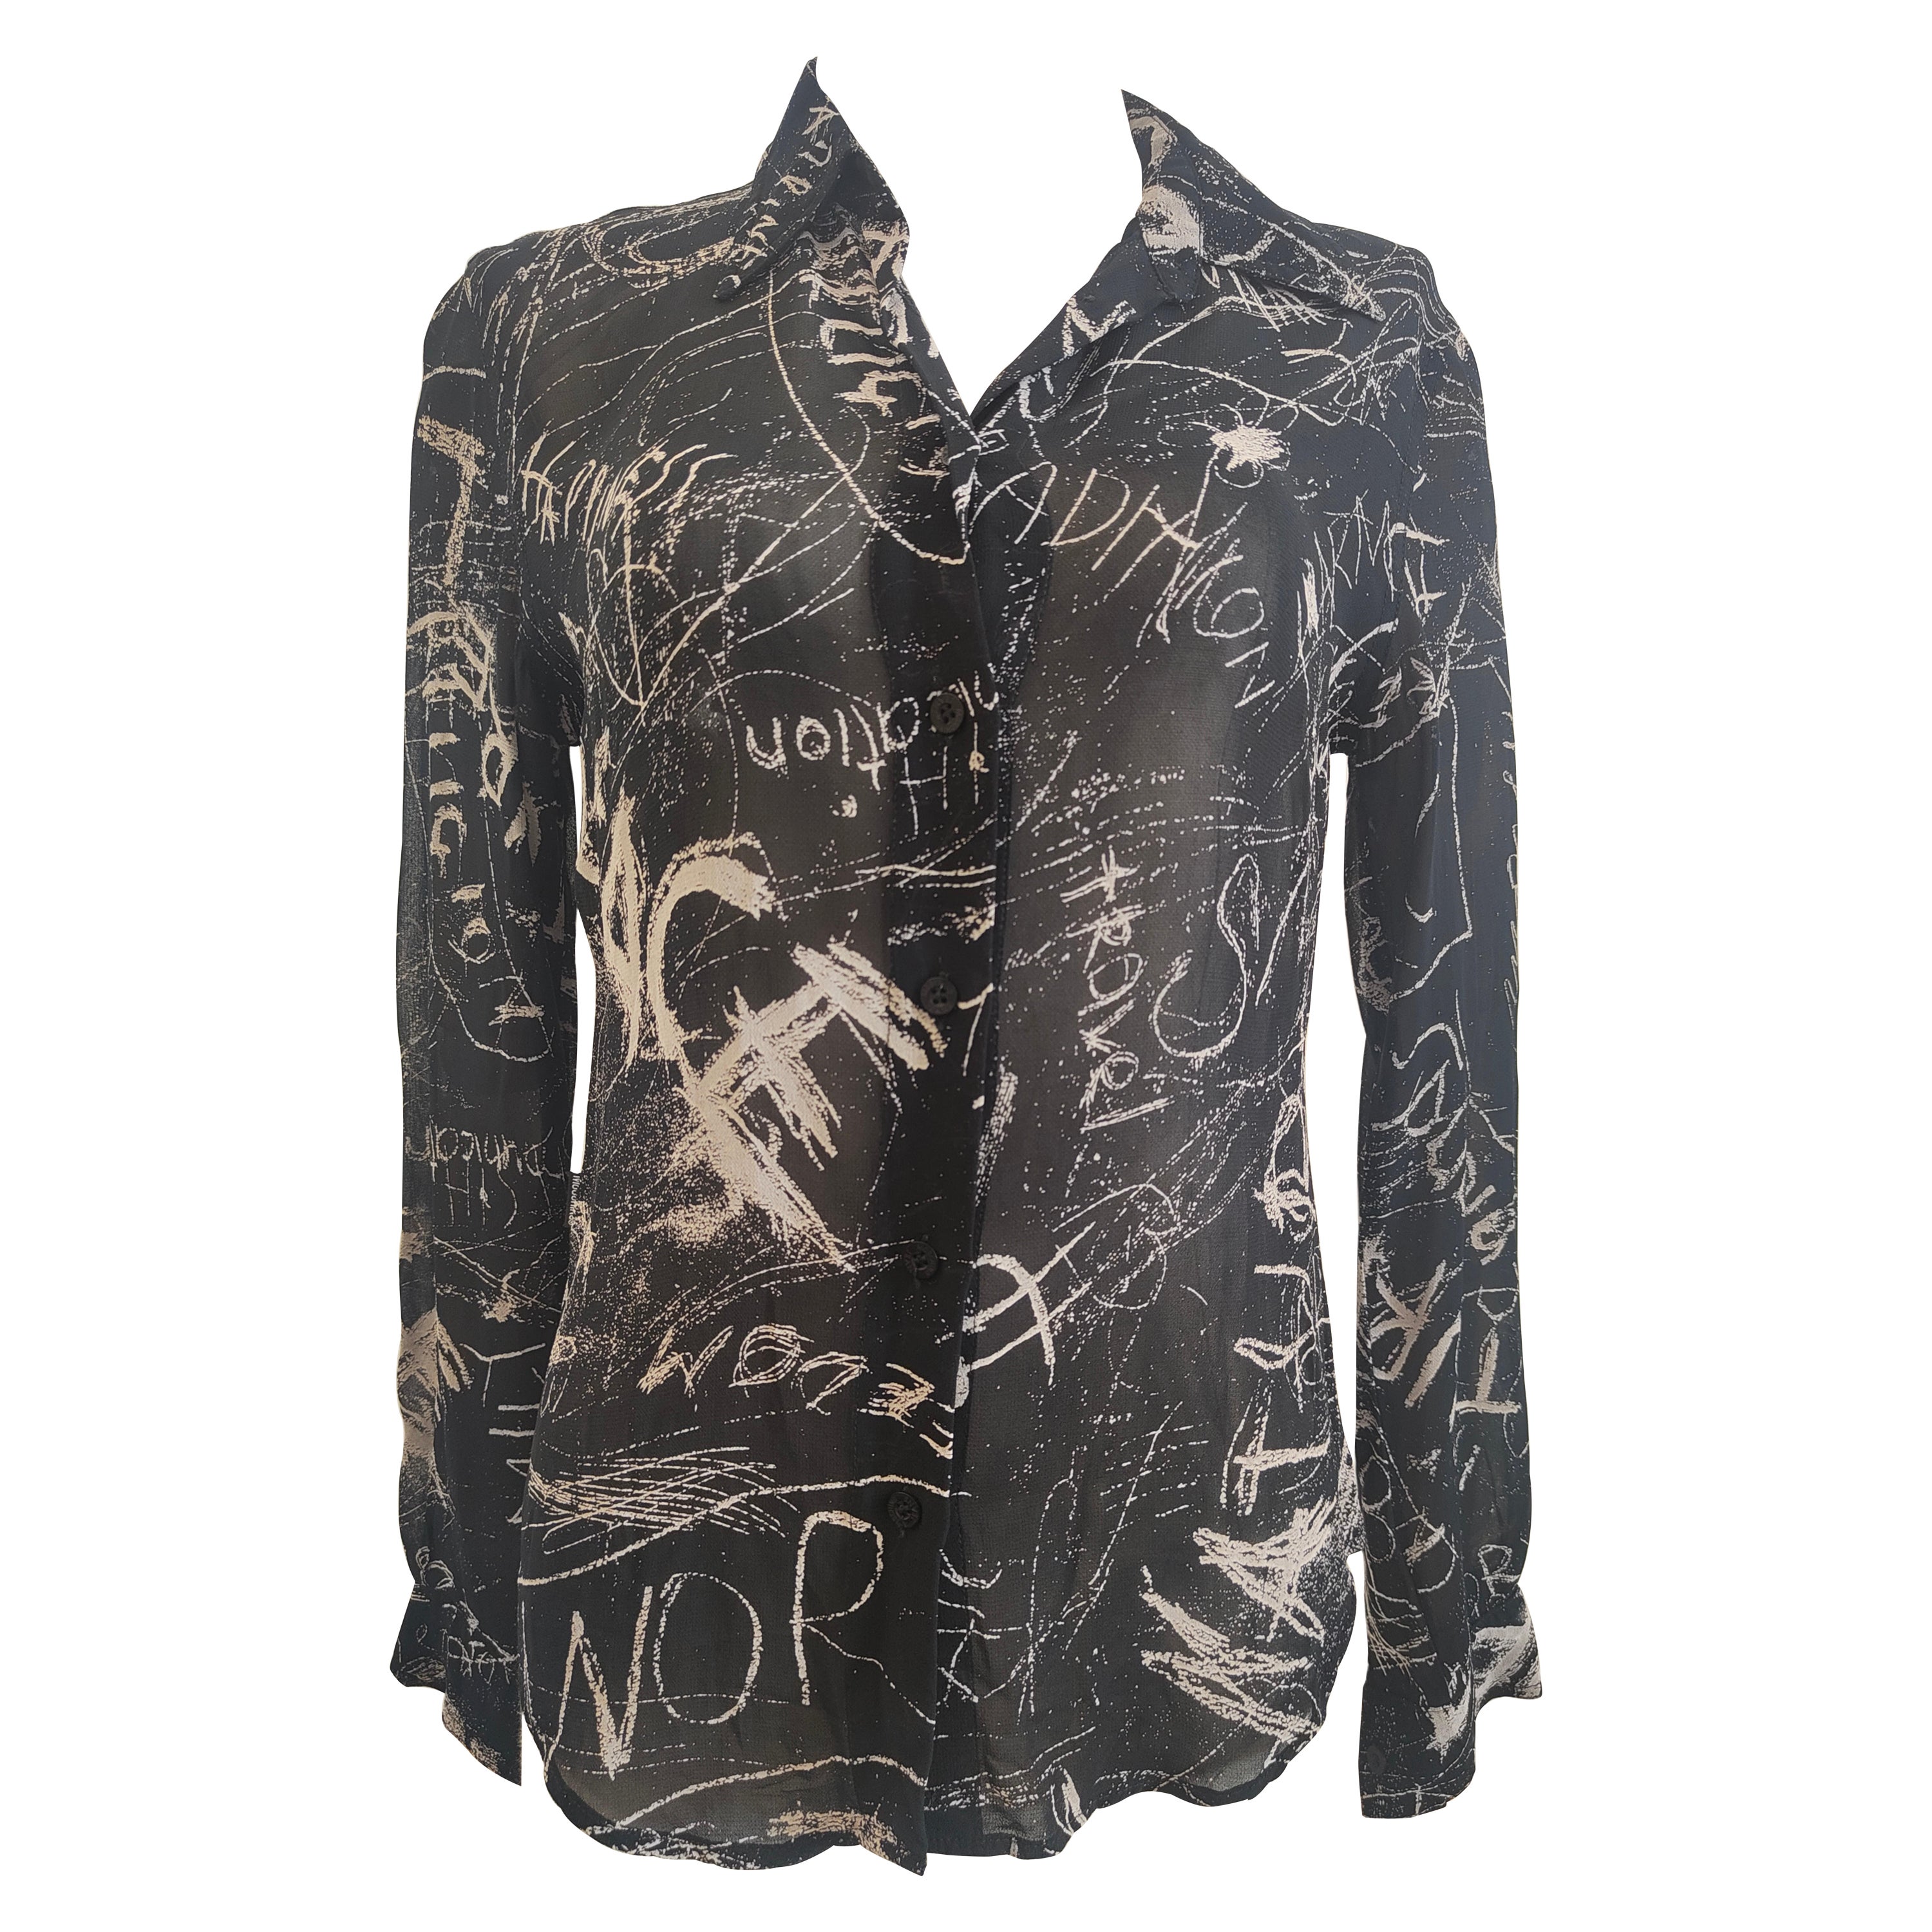 Moschino see through graffiti shirt For Sale